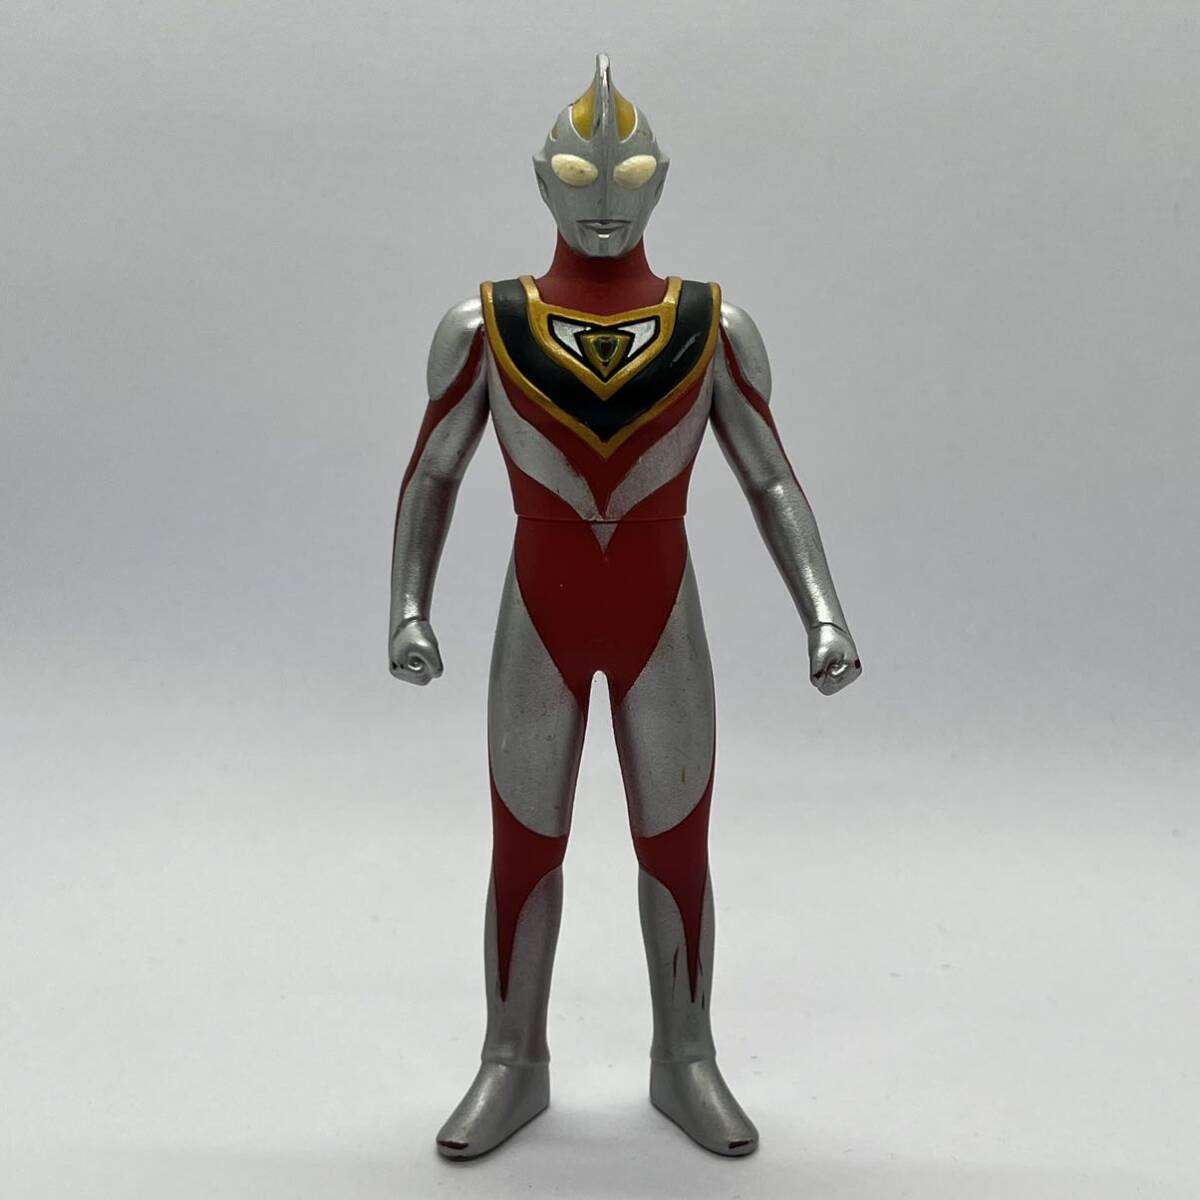  Ultraman Gaya Ultra герой 500 серии / Ultraman sofvi 